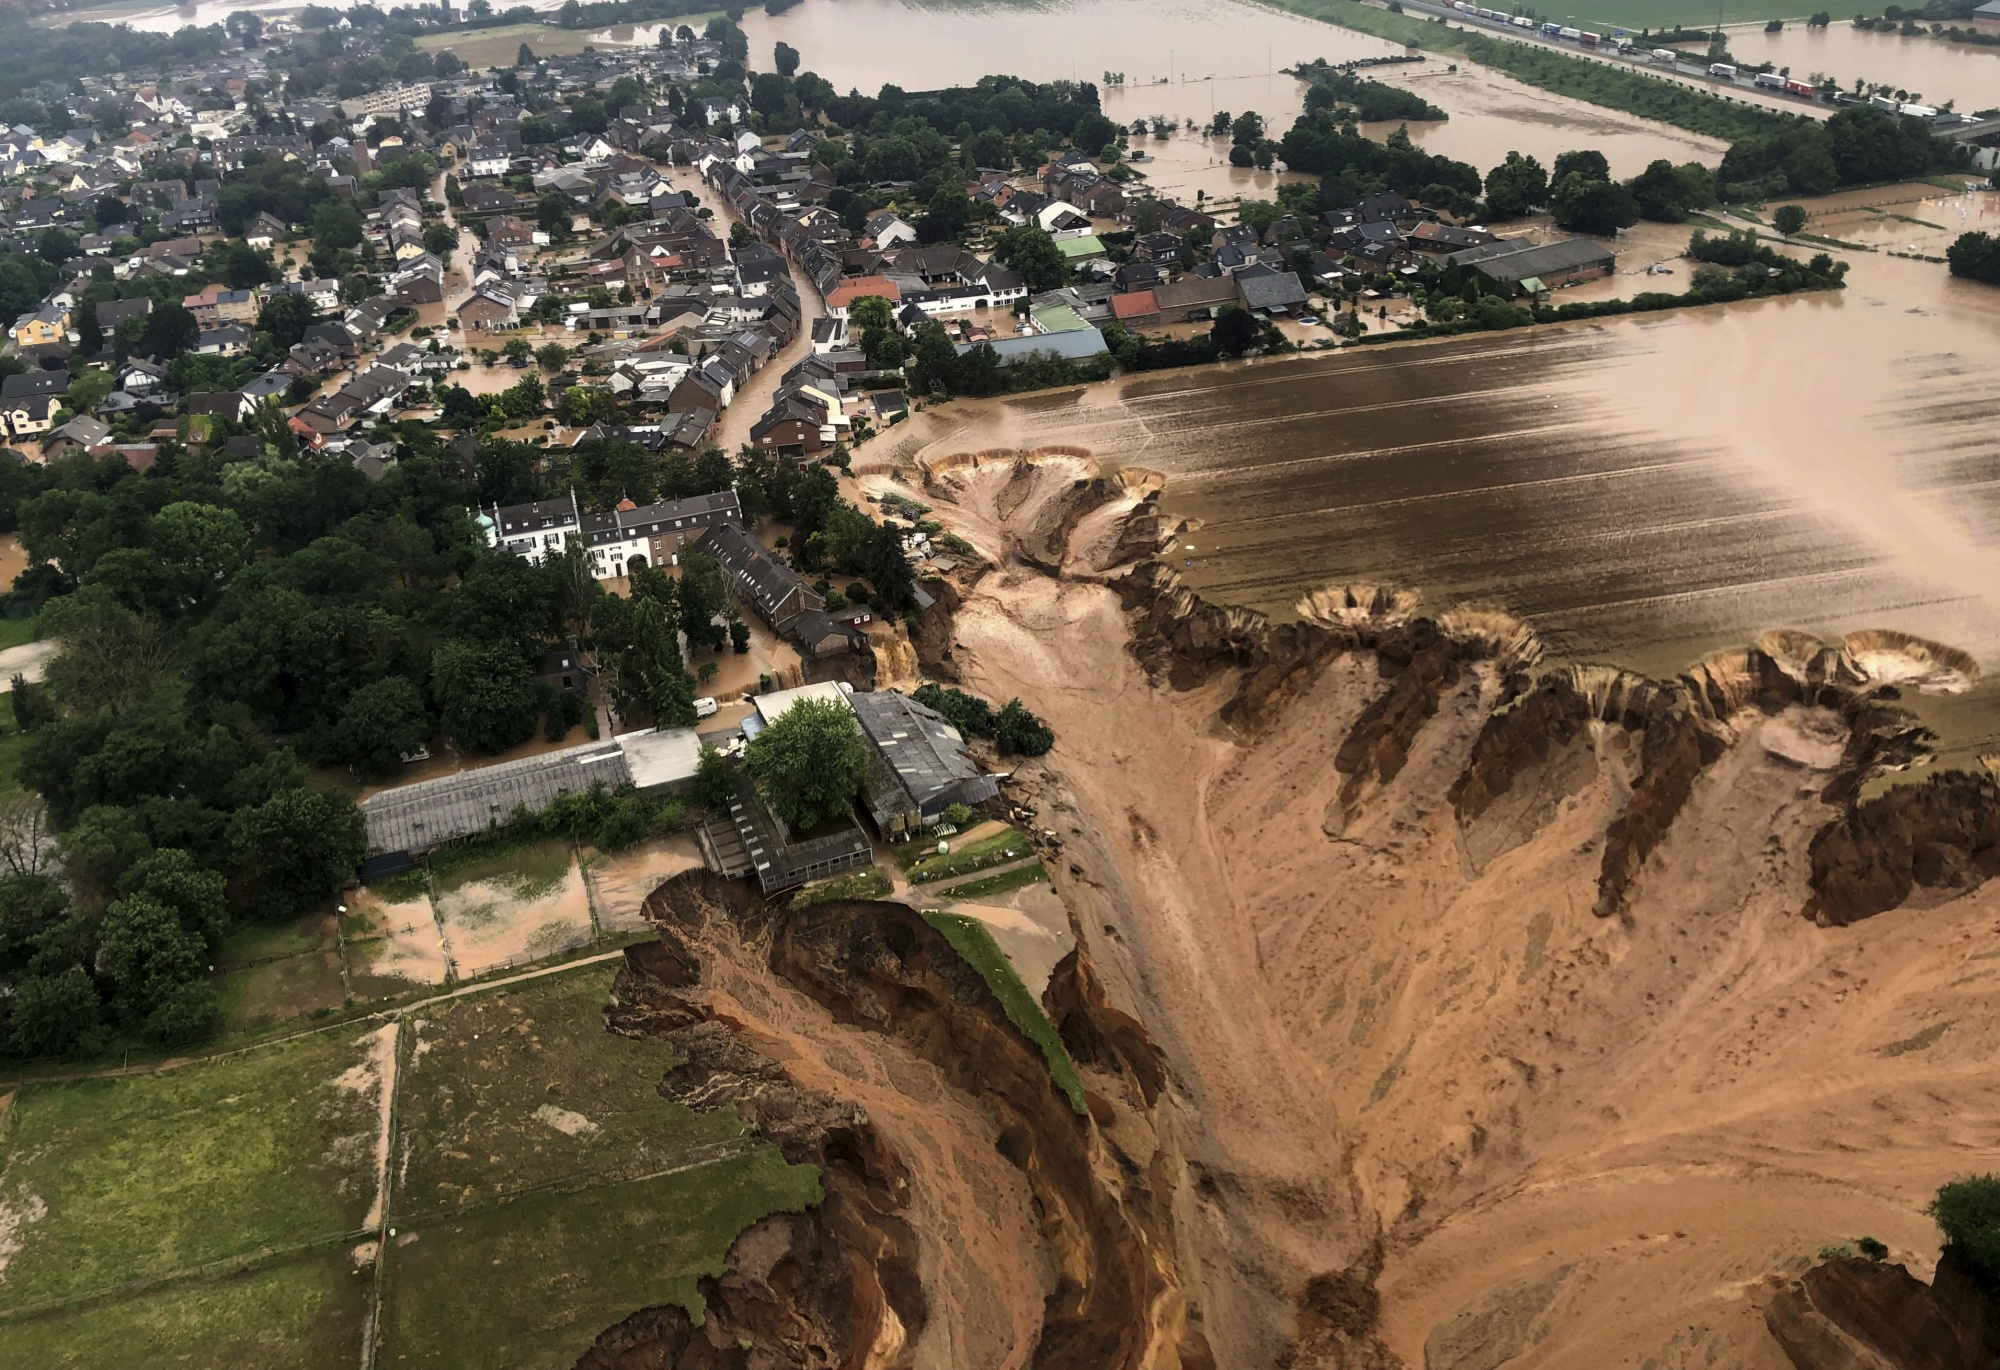 Photos Germany’s Record Flooding Show Devastation Bloomberg